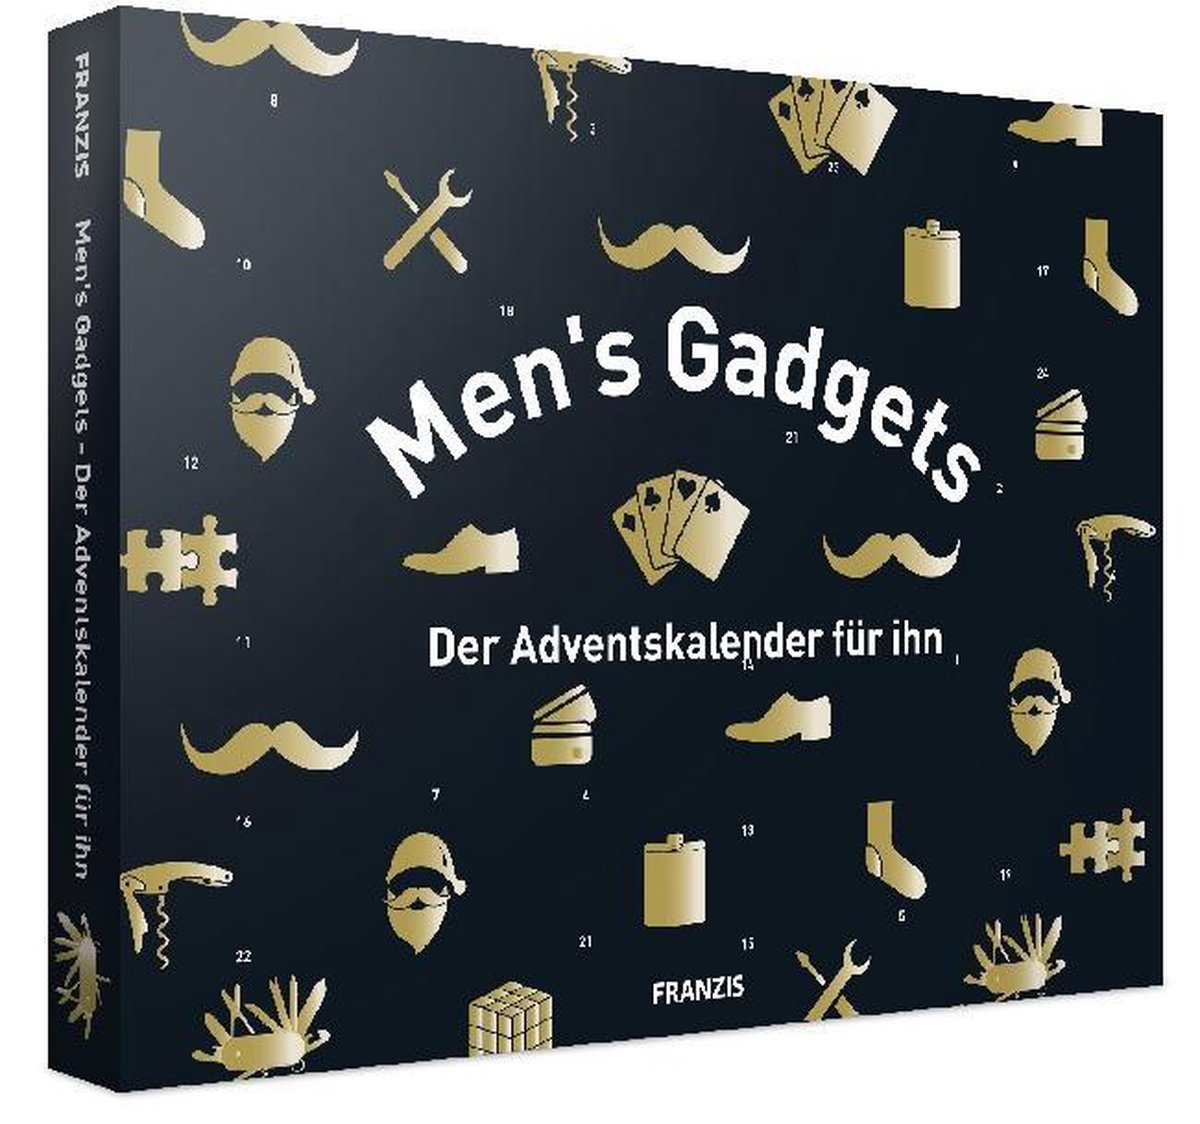 Surrey Flipper Goneryl Franzis-Verlag Mannen Gadgets Adventskalender | bol.com